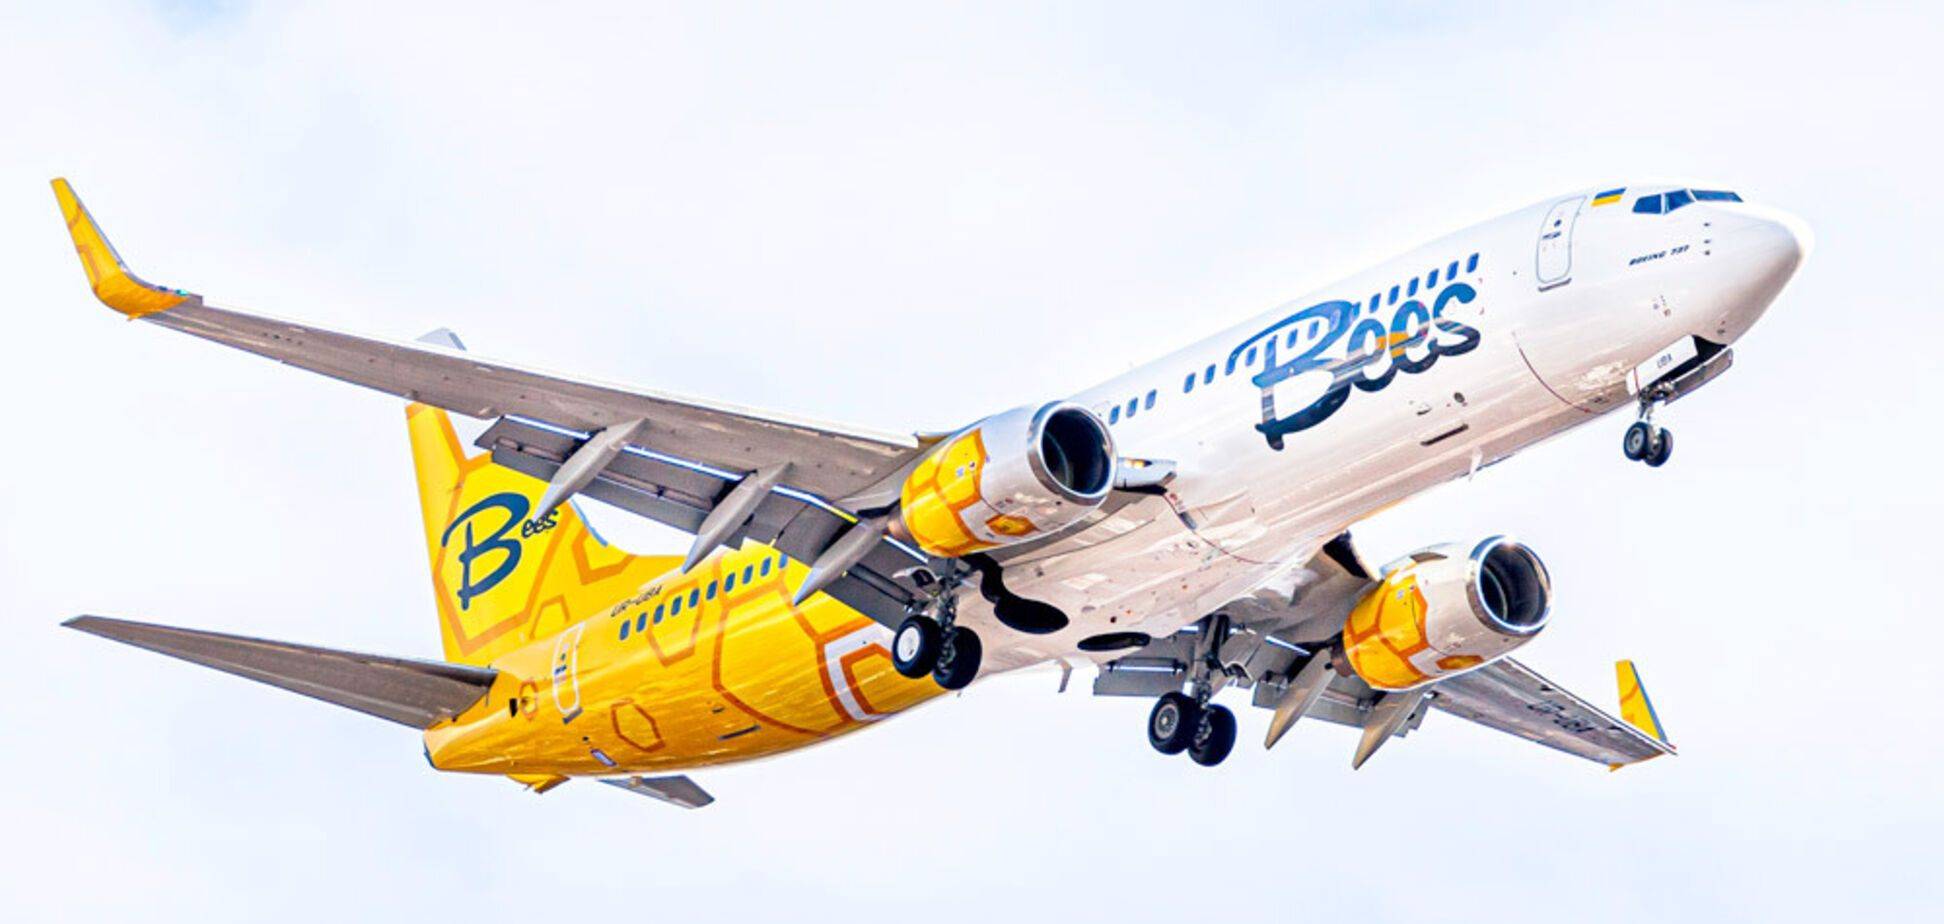 Vueling (вуэлинг) lowcost авиакомпания | лоукост украина